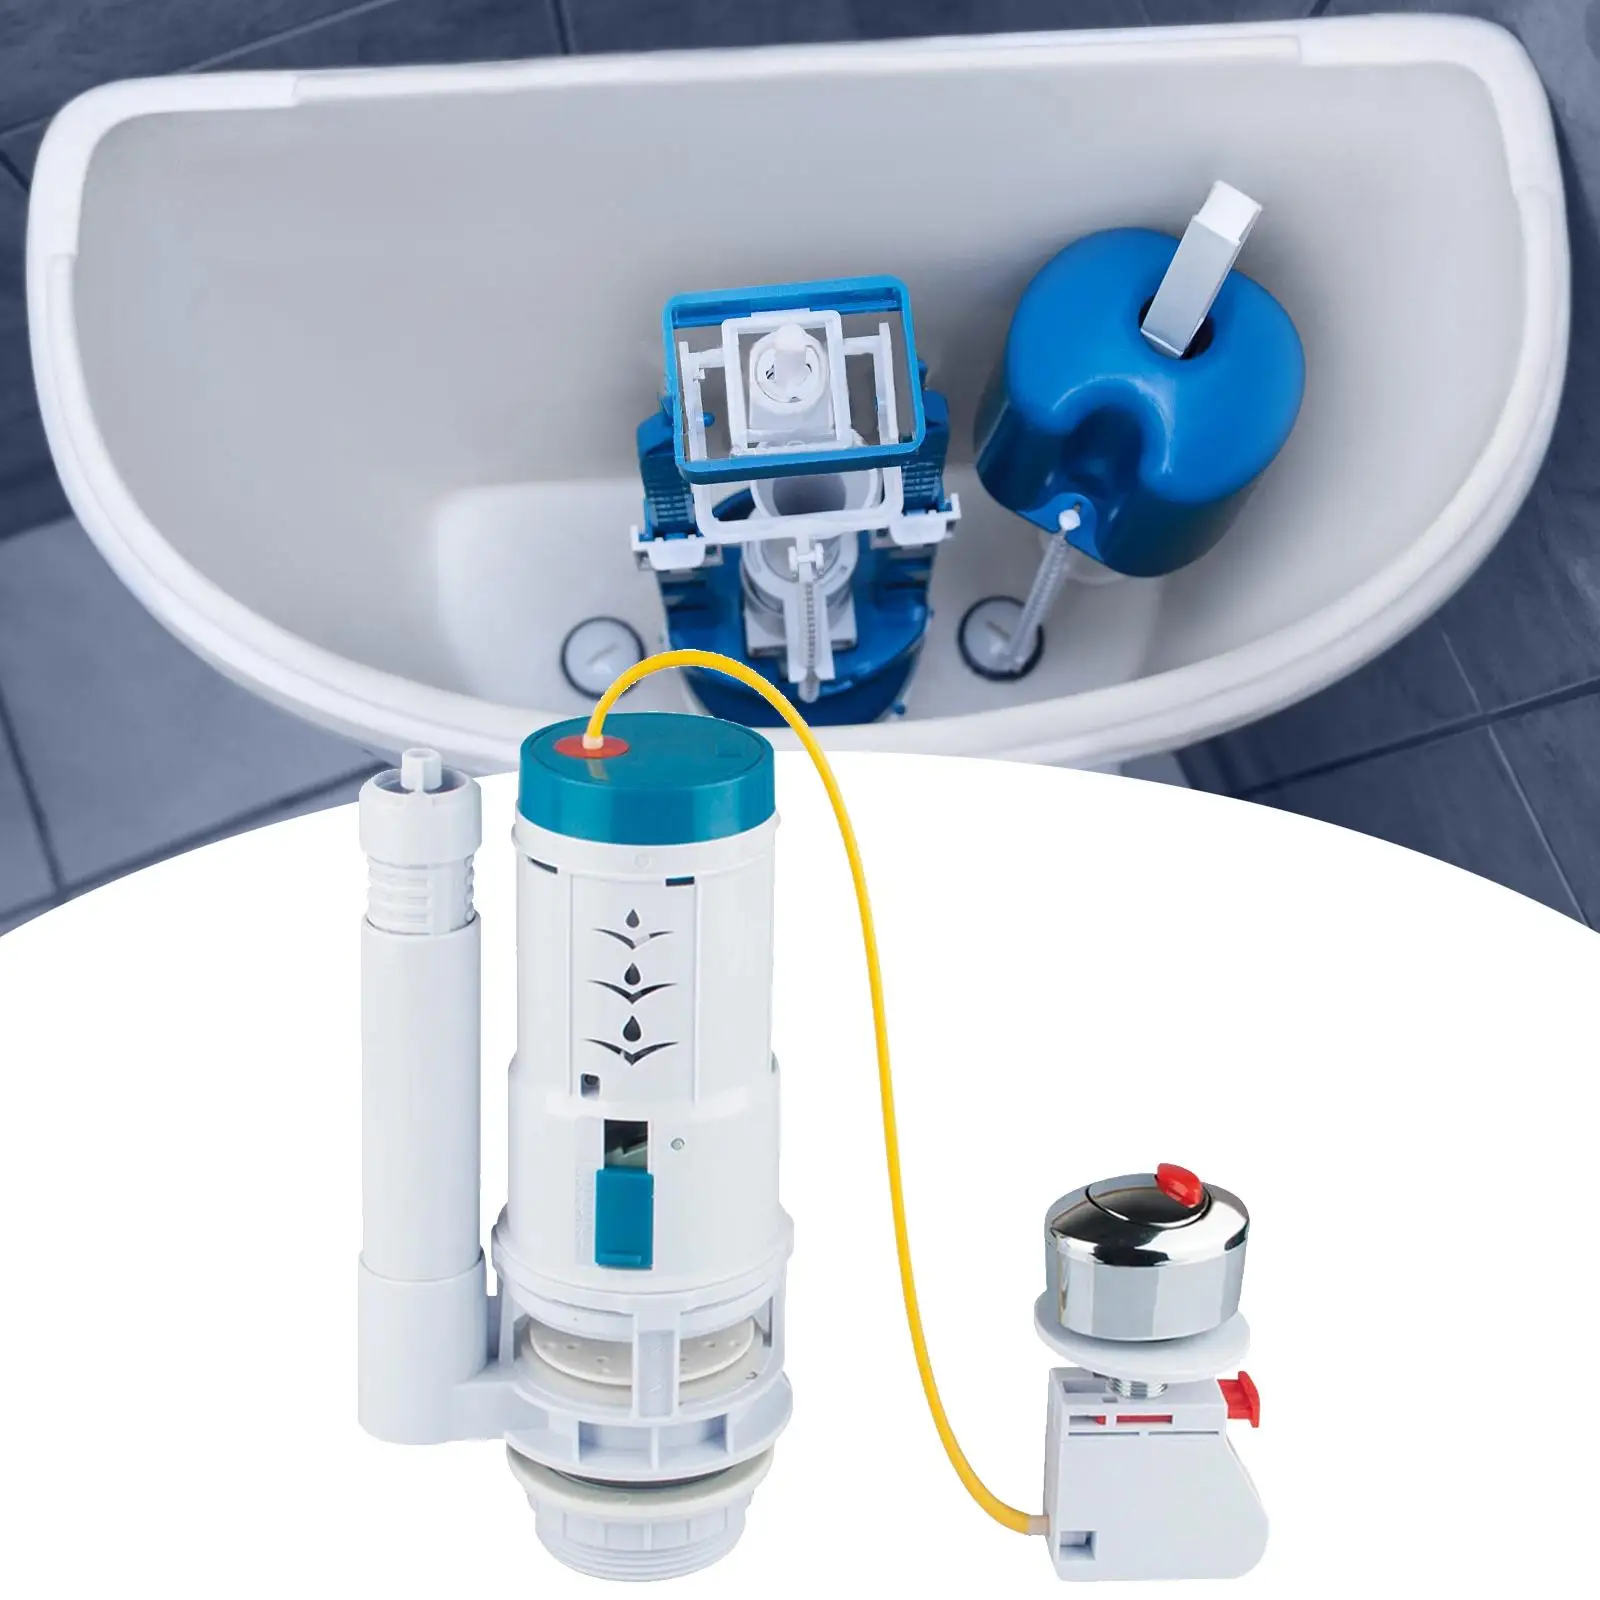 Toilet Filling Valves High Performance Toilet Tank Water Saving Flush Valves